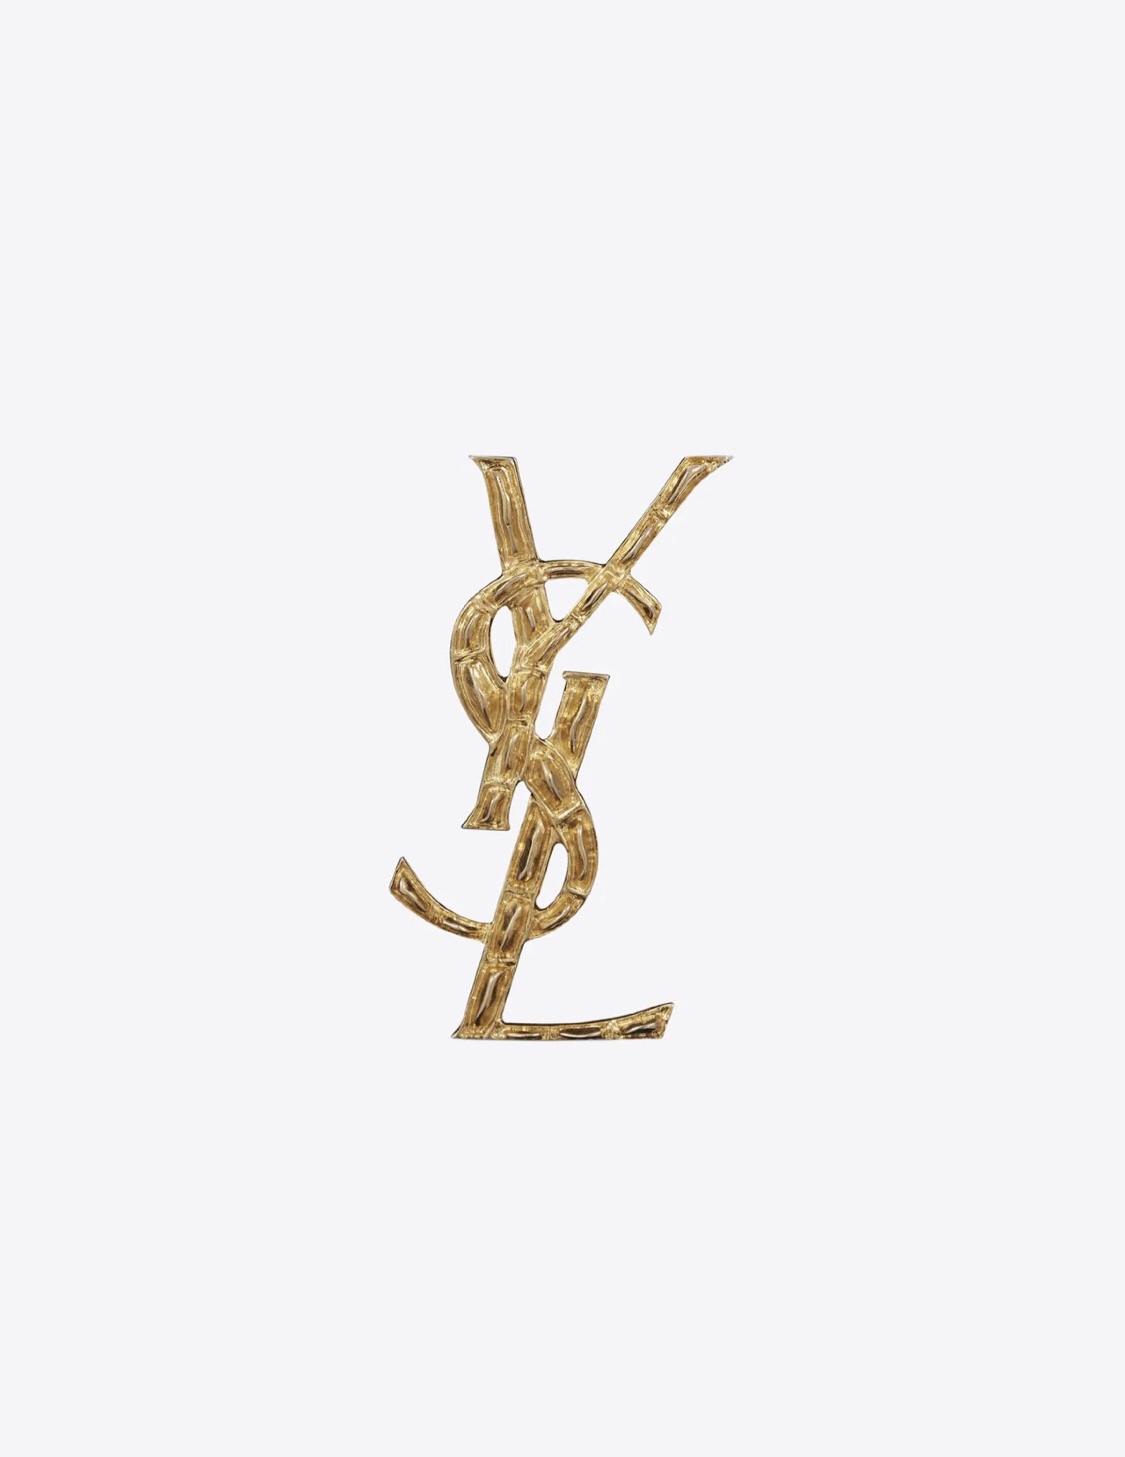 Buy Online
 Yves Saint Laurent Jewelry Brooch